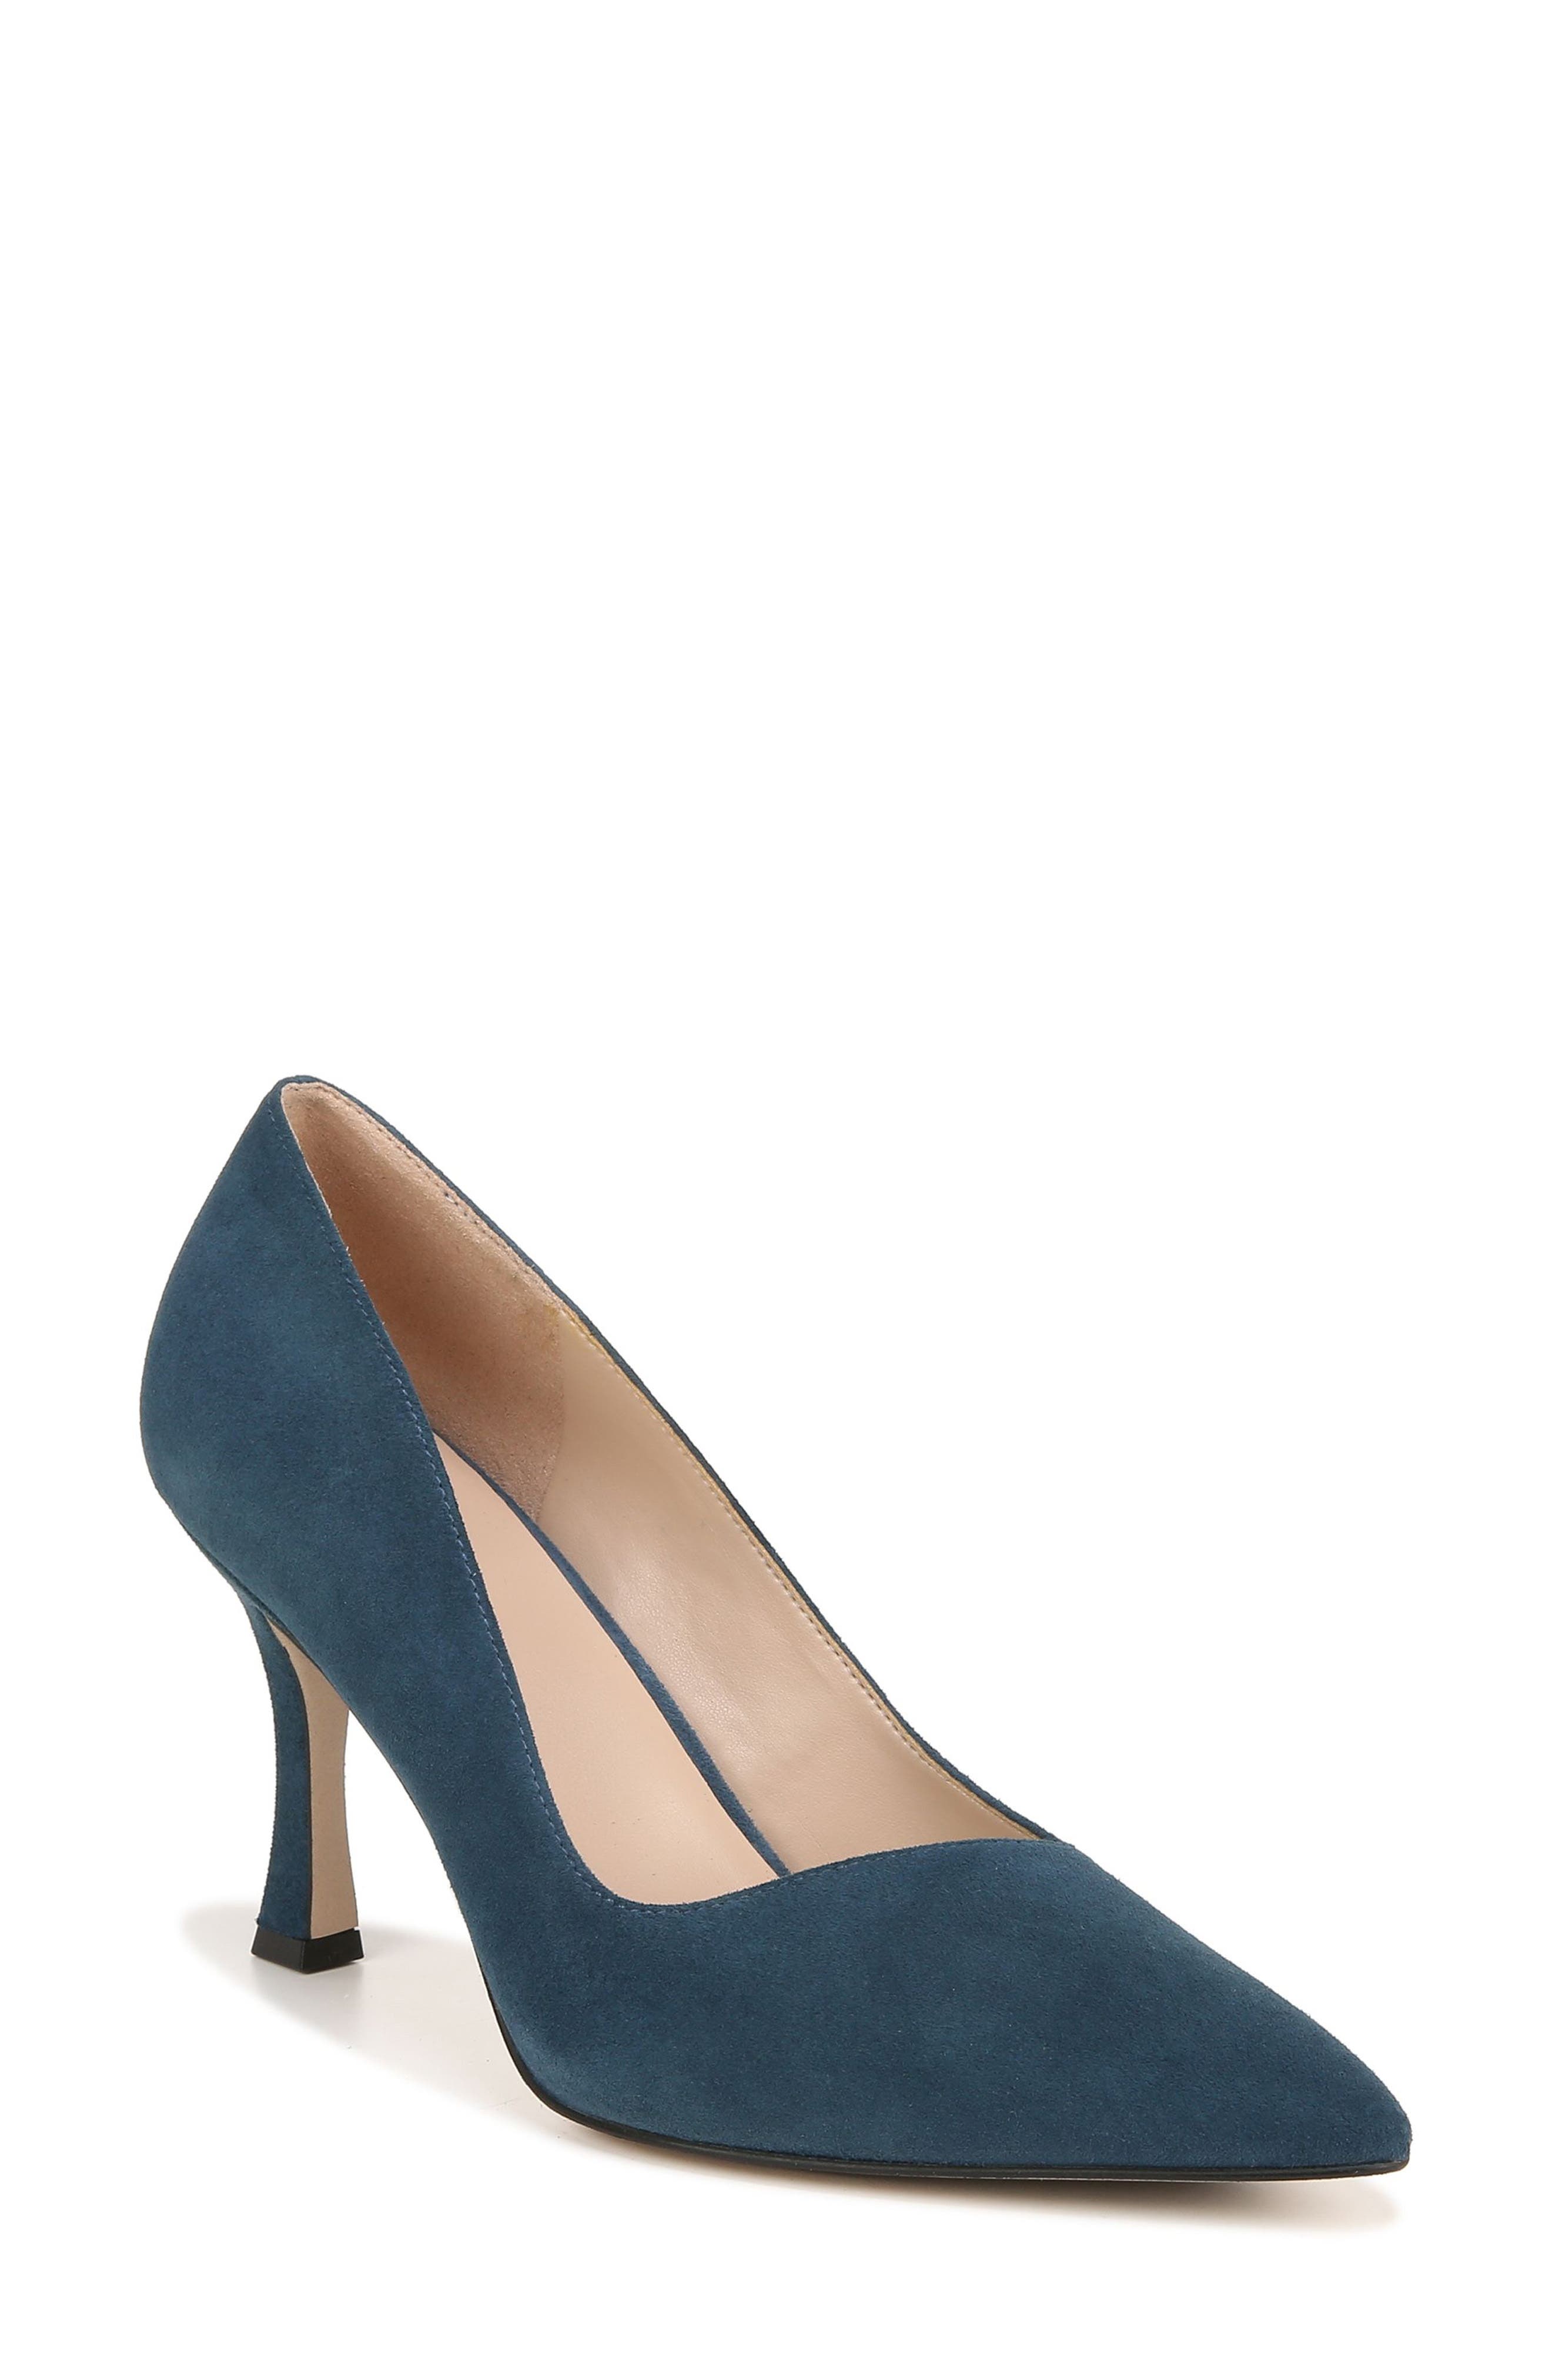 blue dress shoes womens